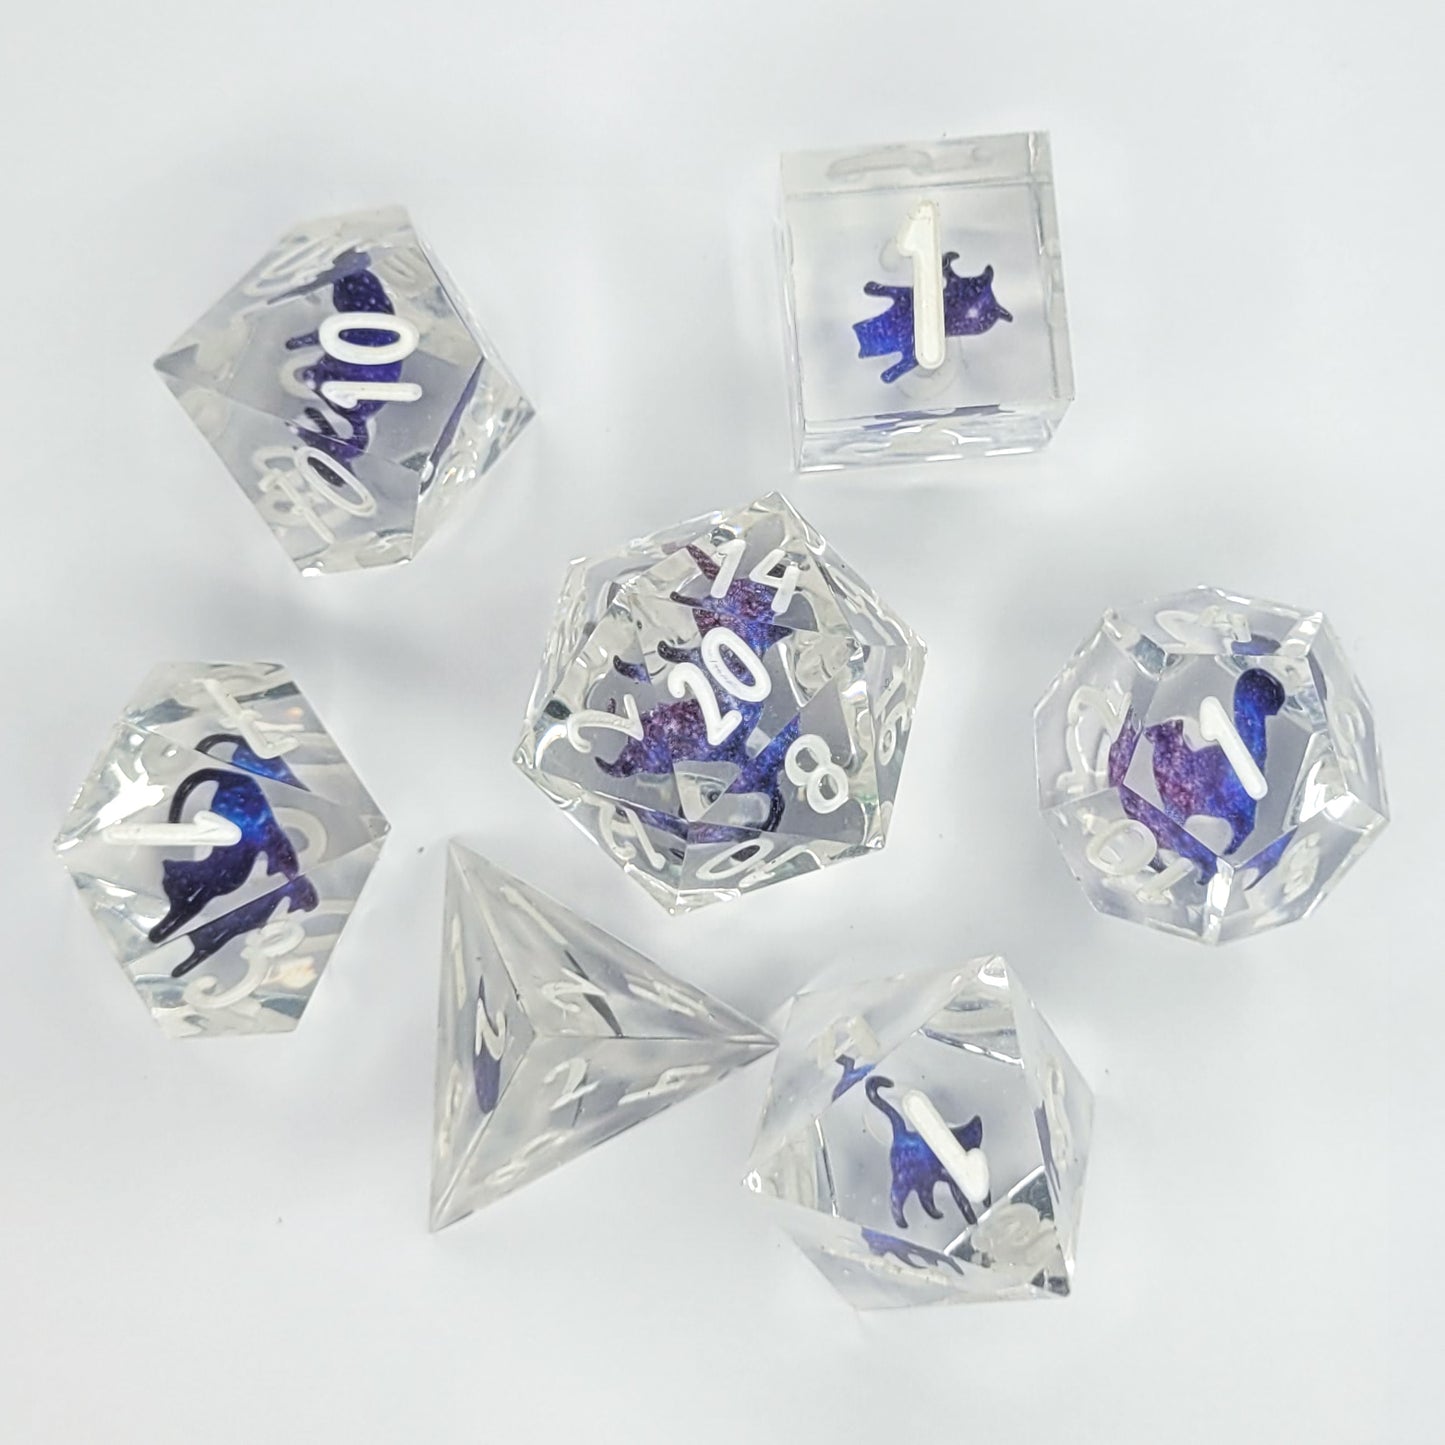 Purryhedrals Galaxy Cat sharp-edge dice